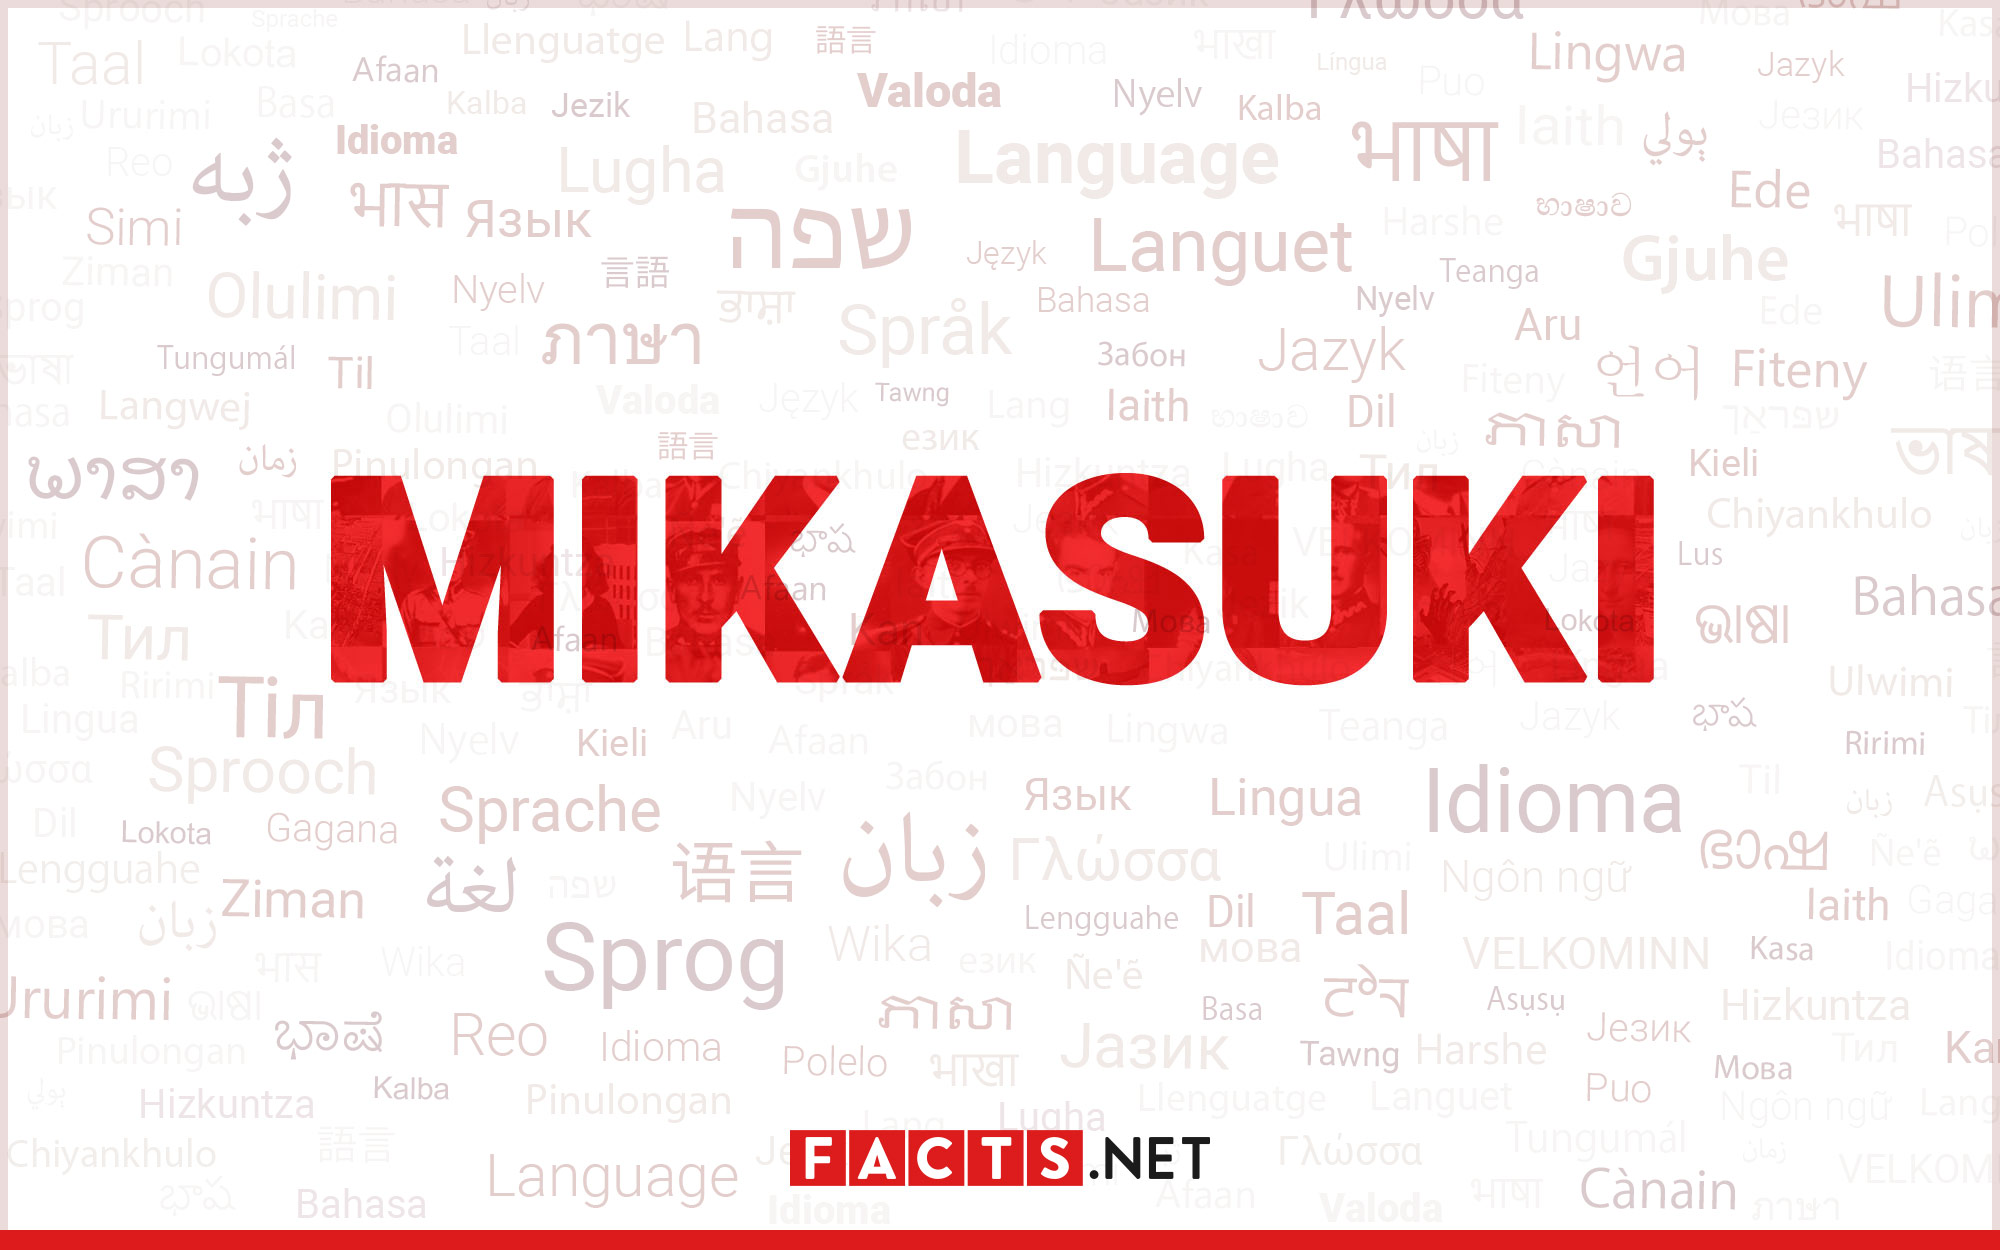 10-astounding-facts-about-mikasuki